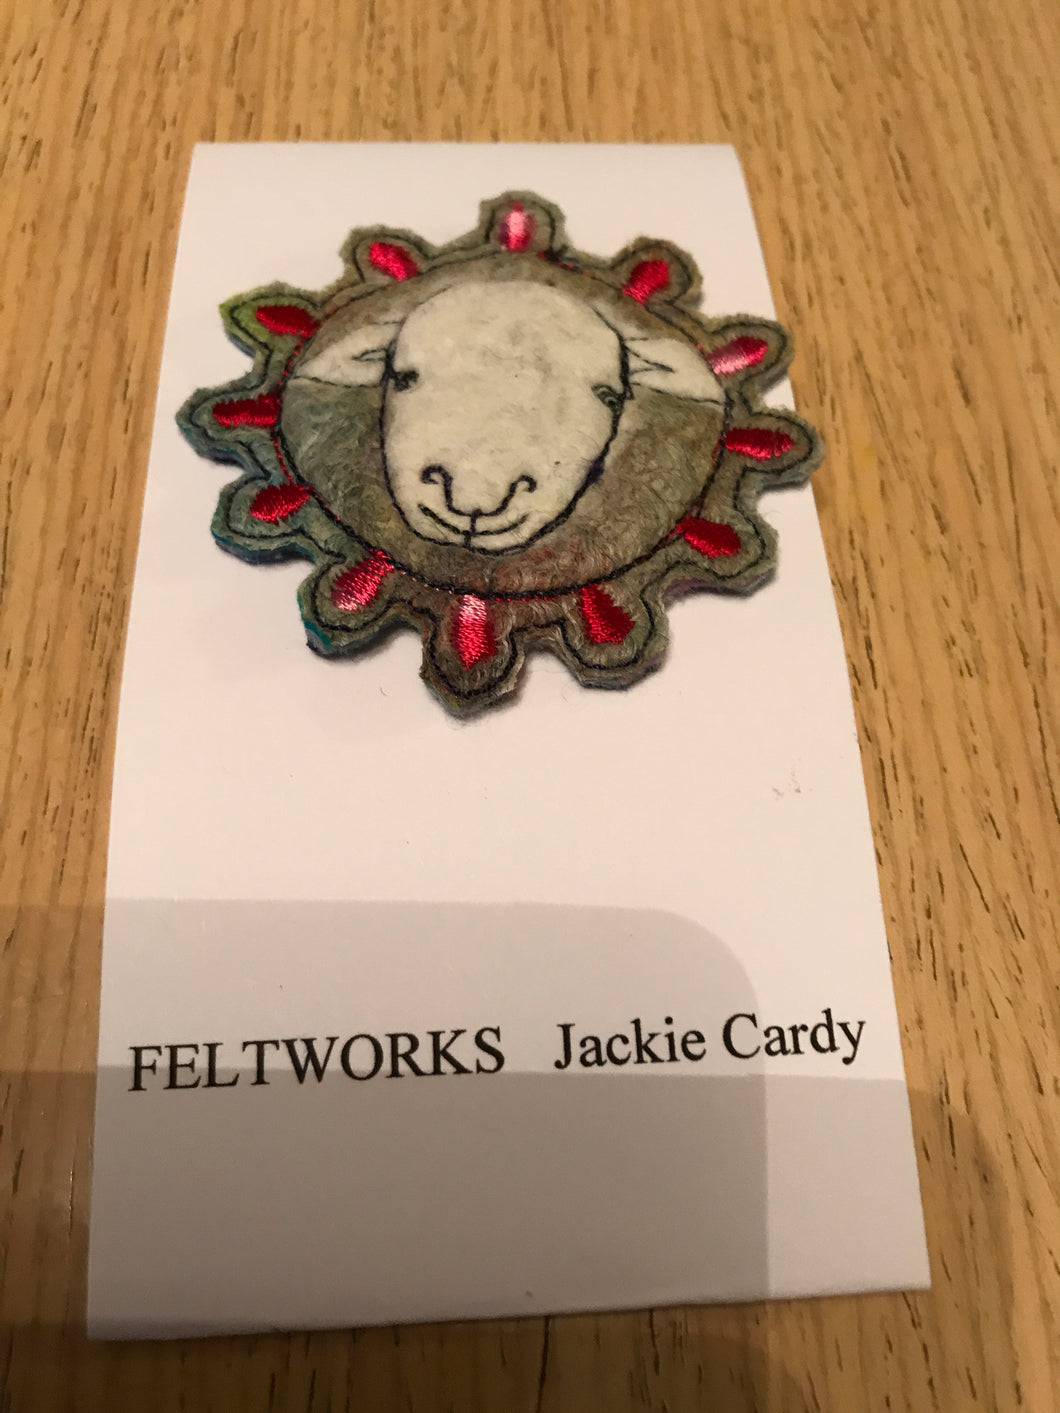 Handmade felt sheep brooch by Feltworks Jackie Cardy No 4